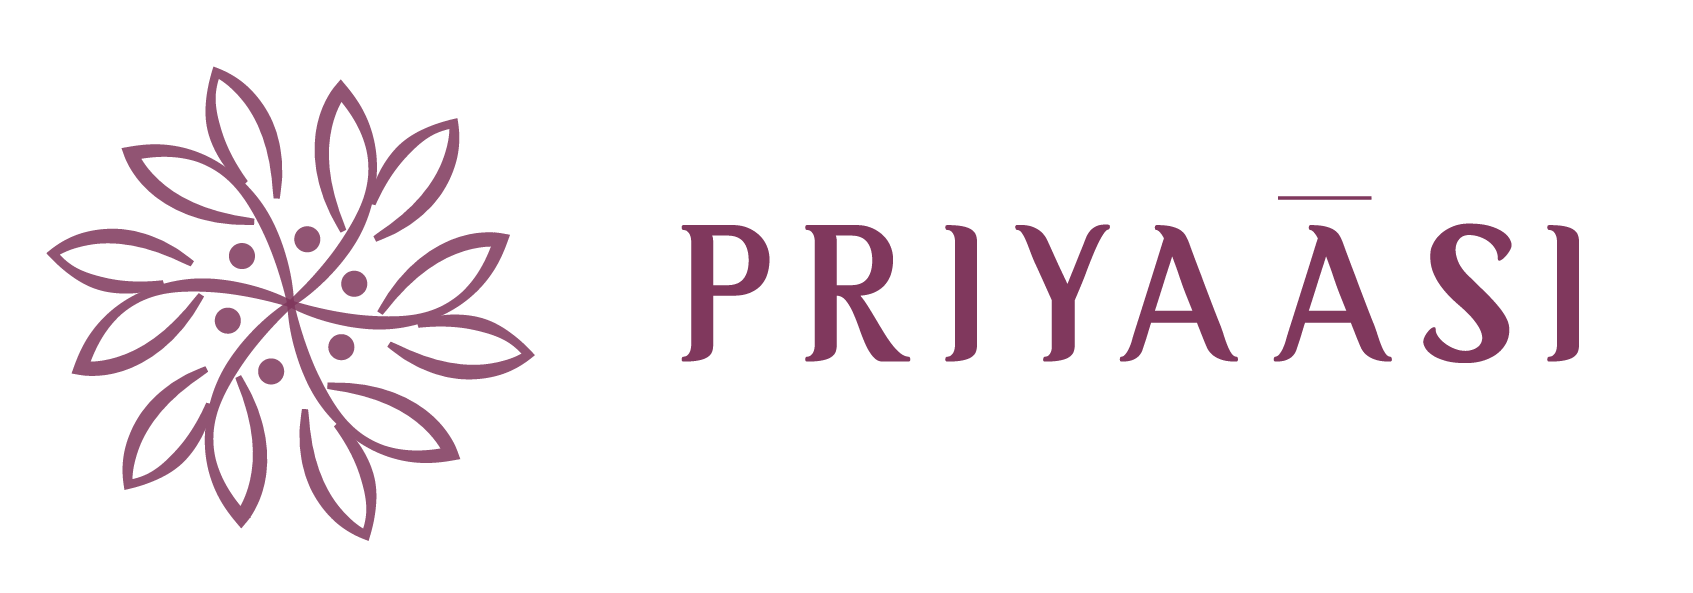 Priyaasi Blog